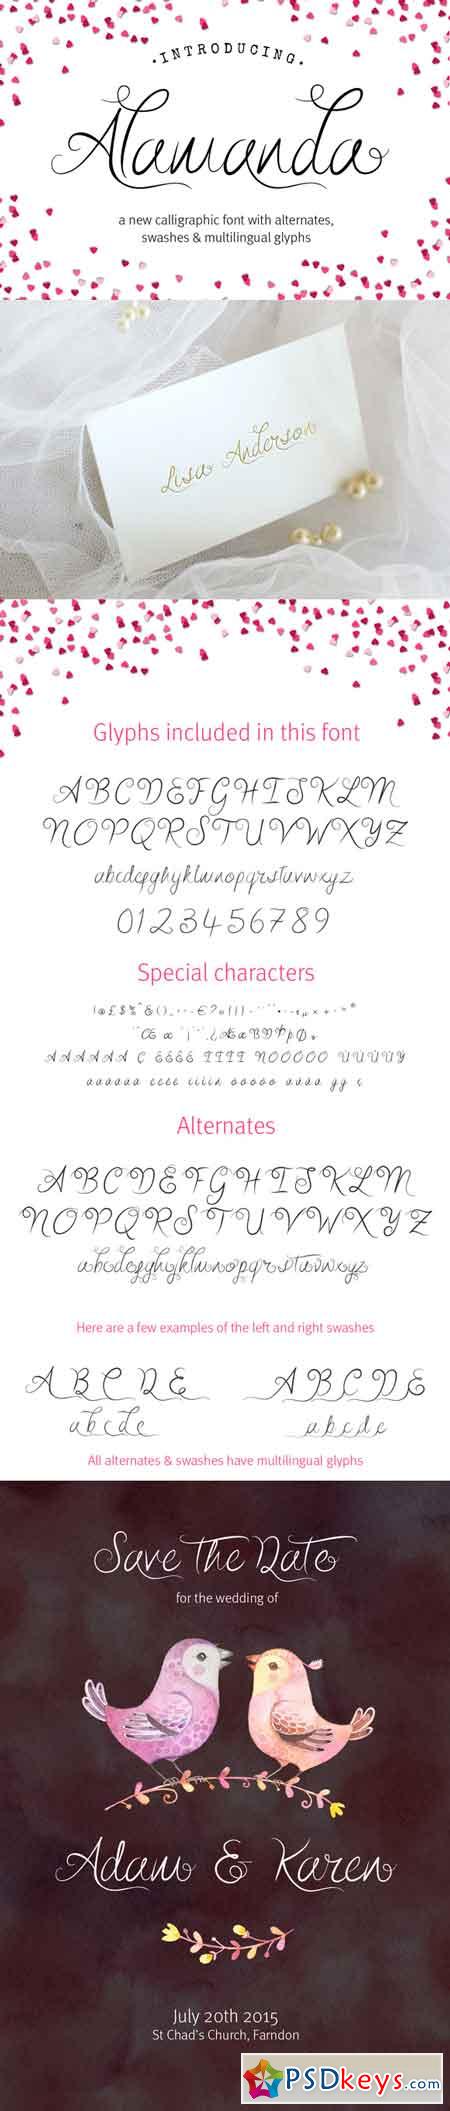 Alamanda calligraphy font 321016